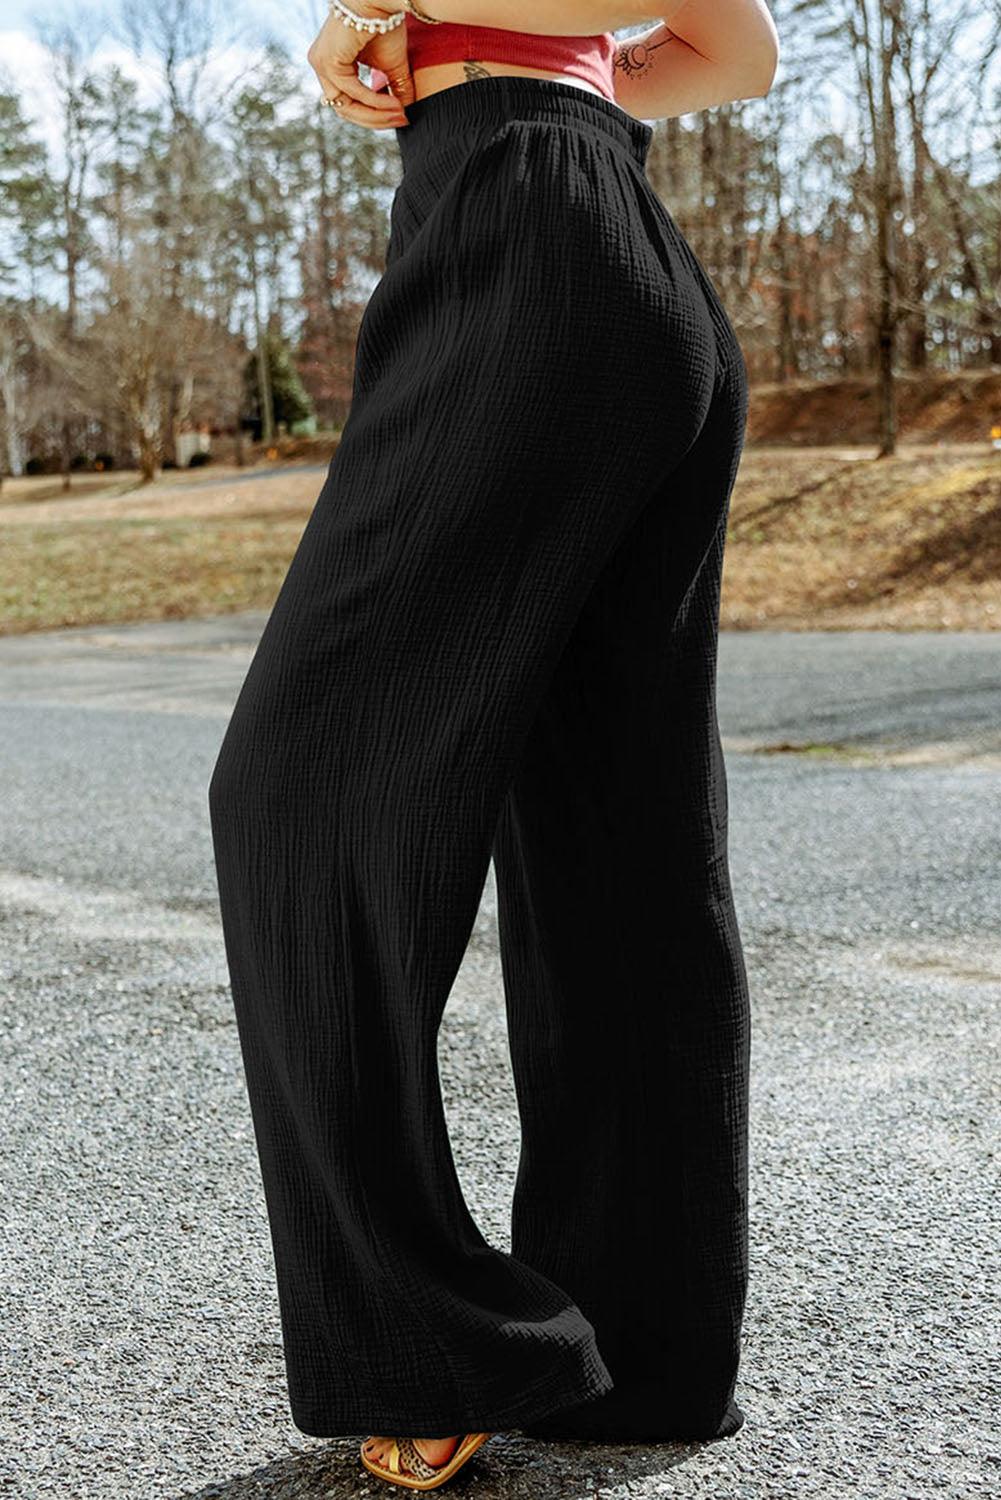 Bona Fide Fashion - Texture Tied Wide Leg Pants - Women Fashion - Bona Fide Fashion